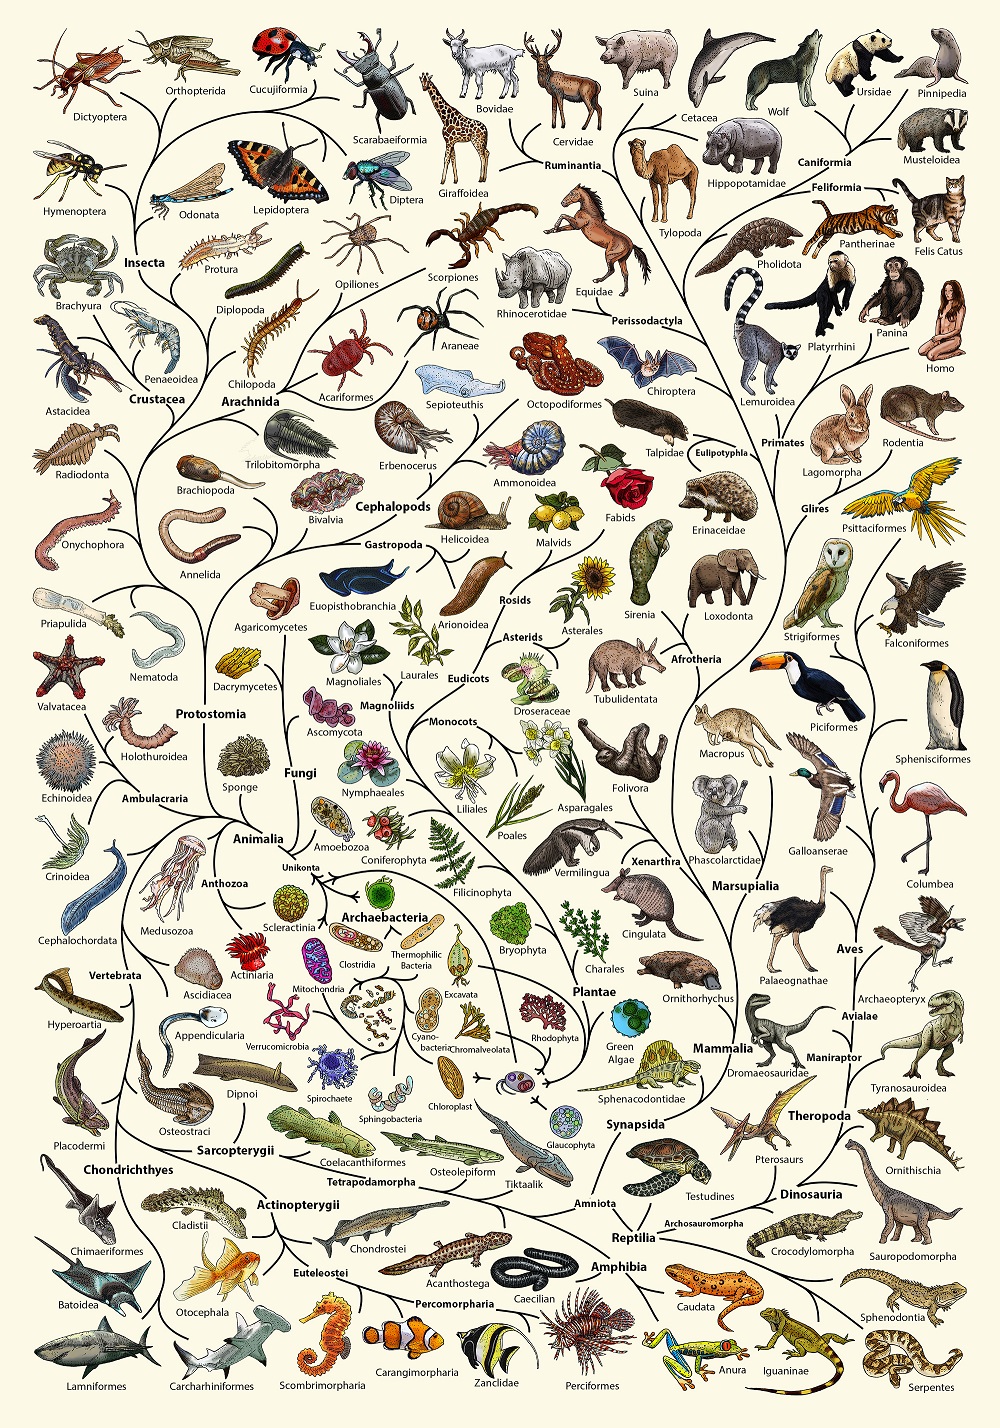 Evolution tree of life poster